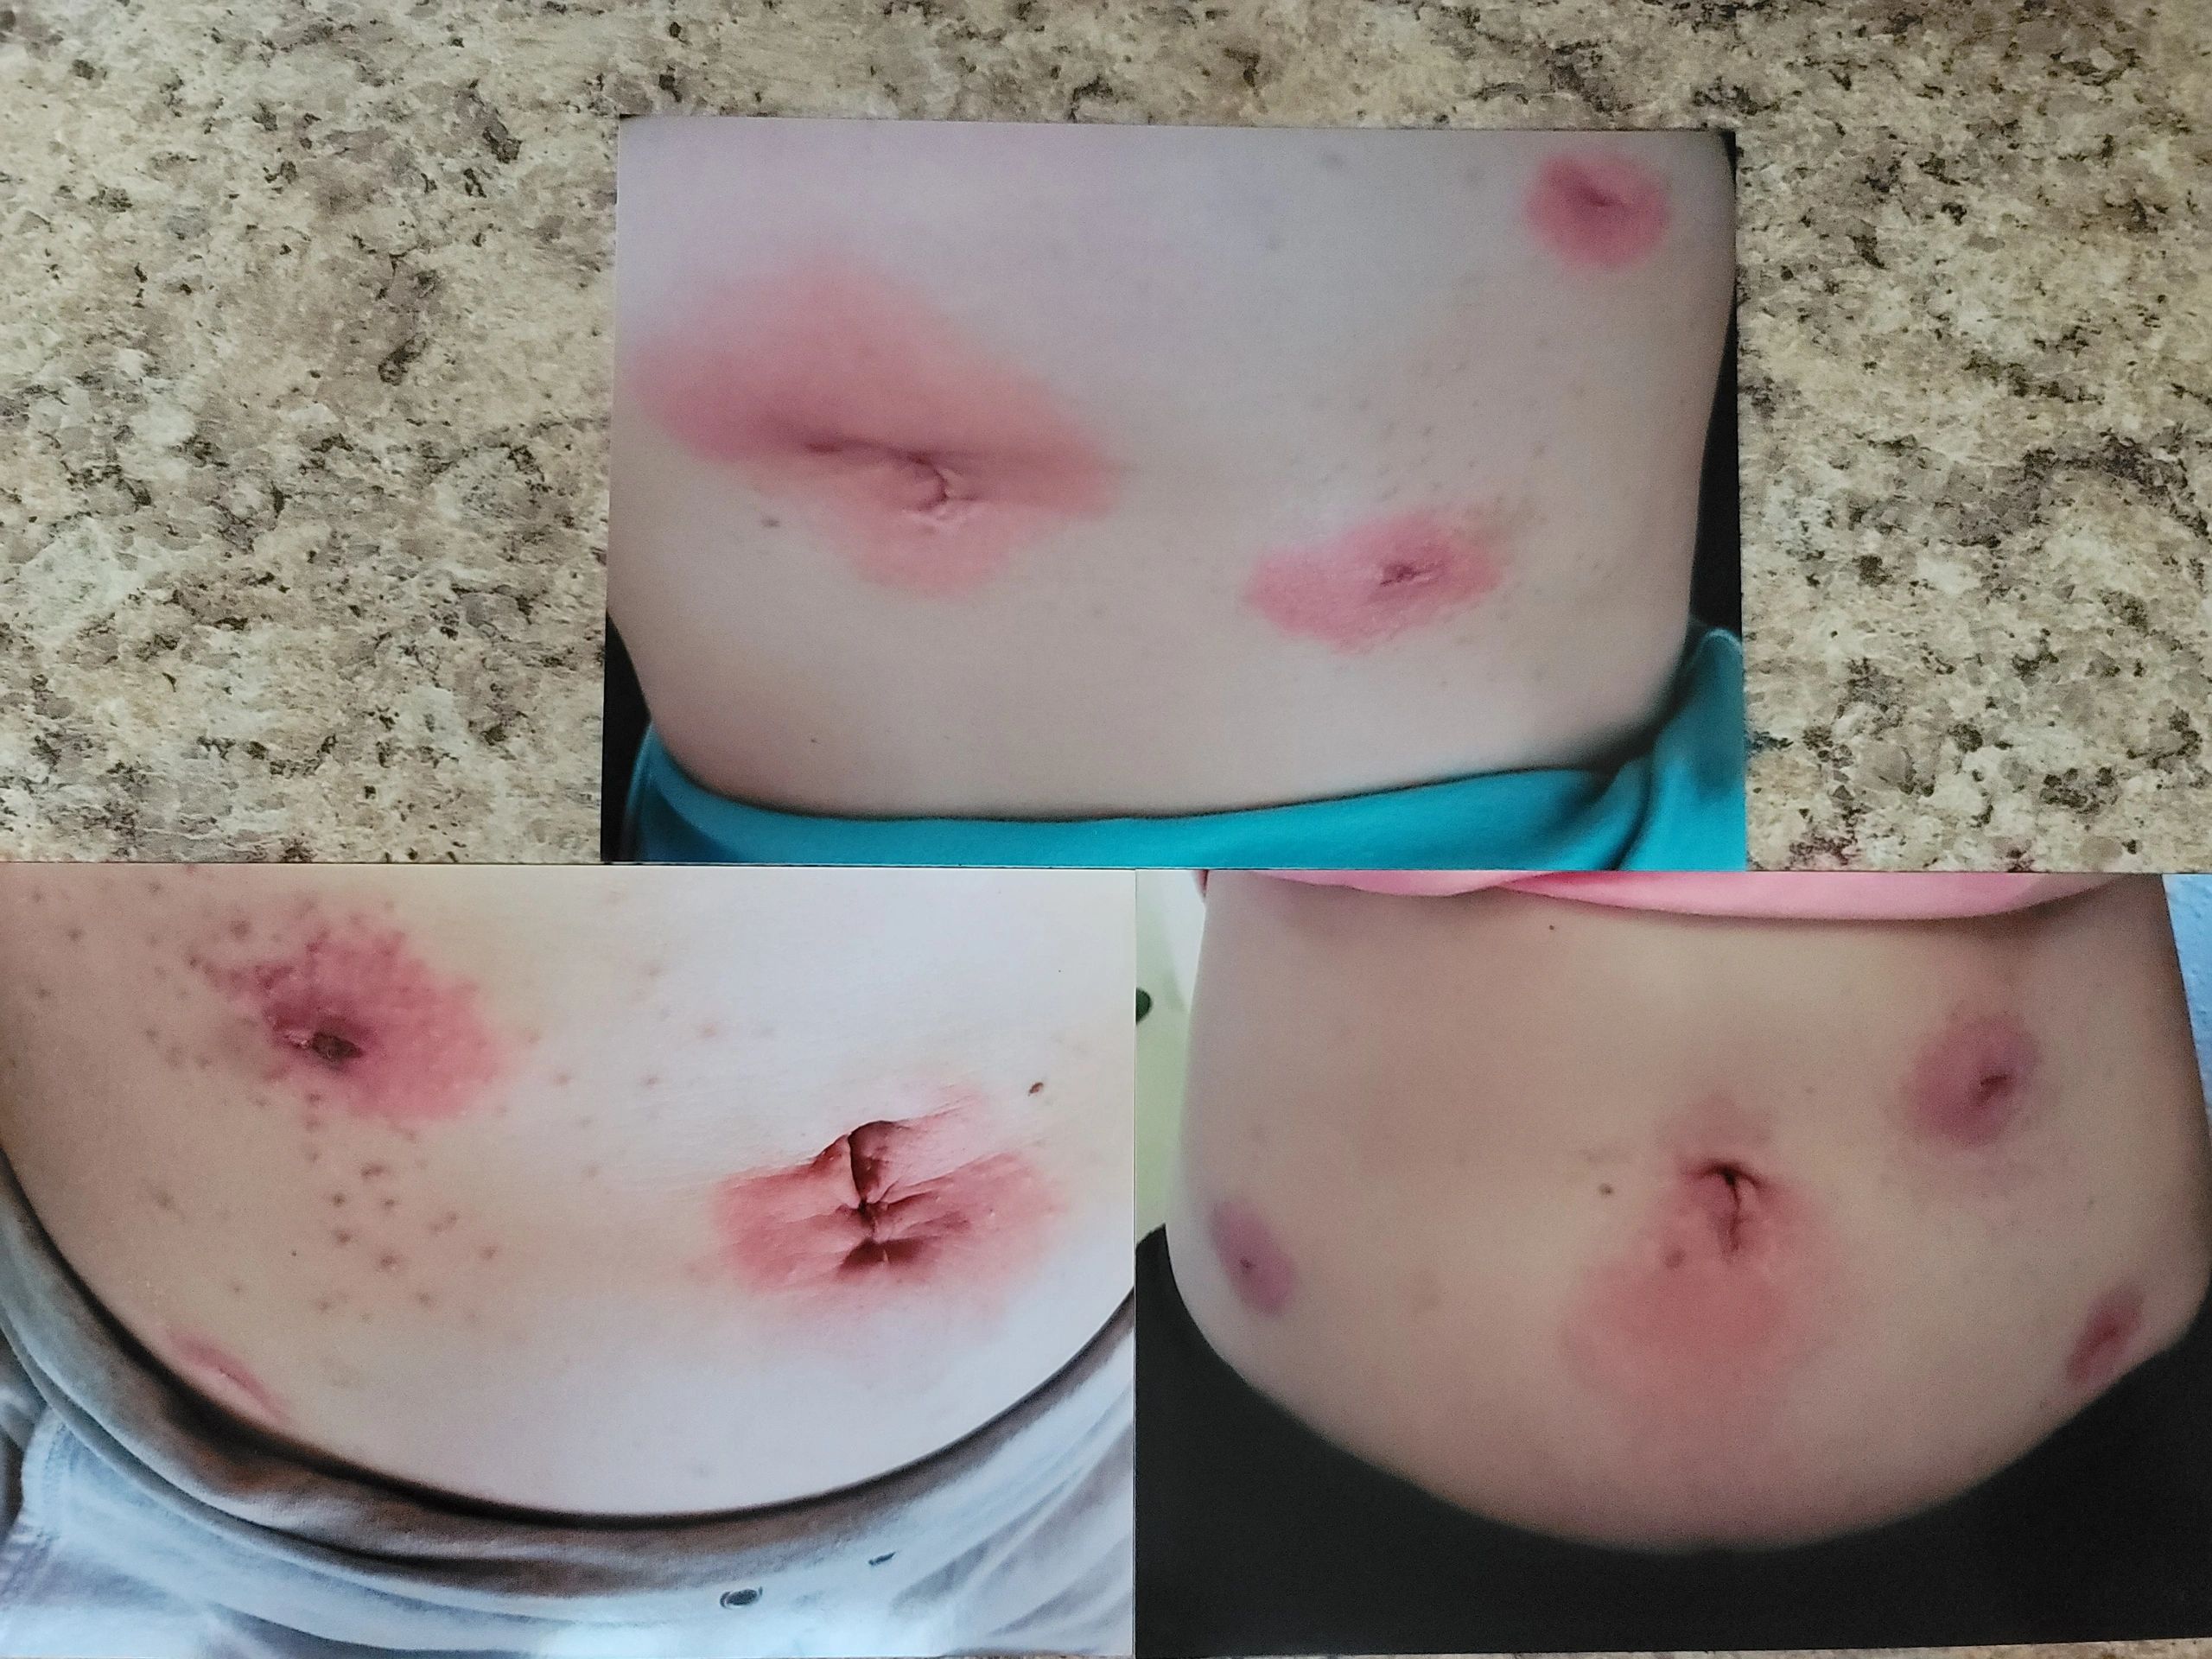 5 days PO - allergic reaction to dermabond : r/tummytucksurgery